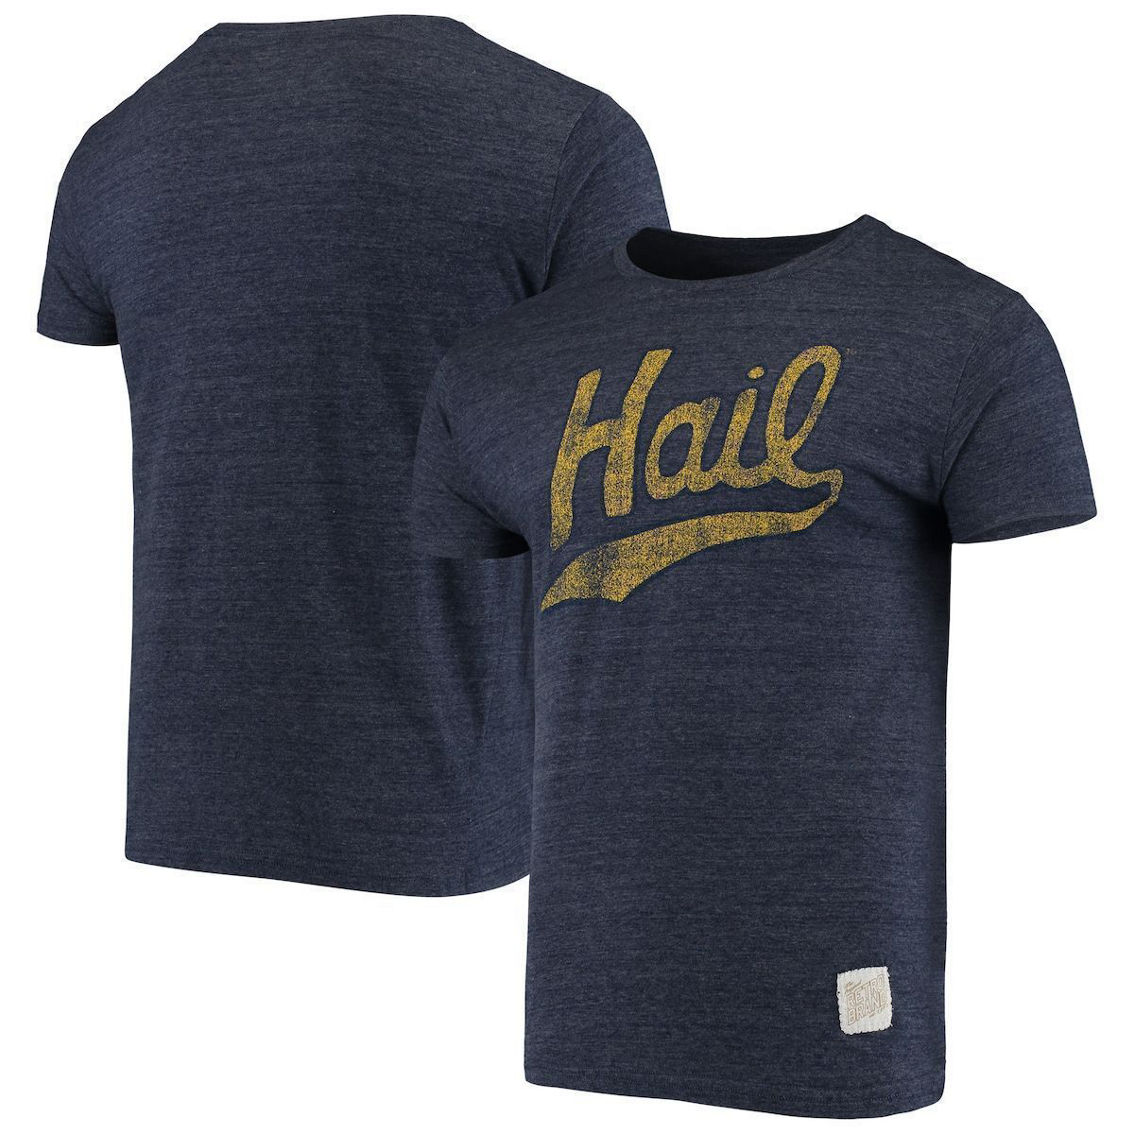 Original Retro Brand Men's Heathered Navy Michigan Wolverines Vintage Hail Tri-Blend T-Shirt - Image 2 of 4